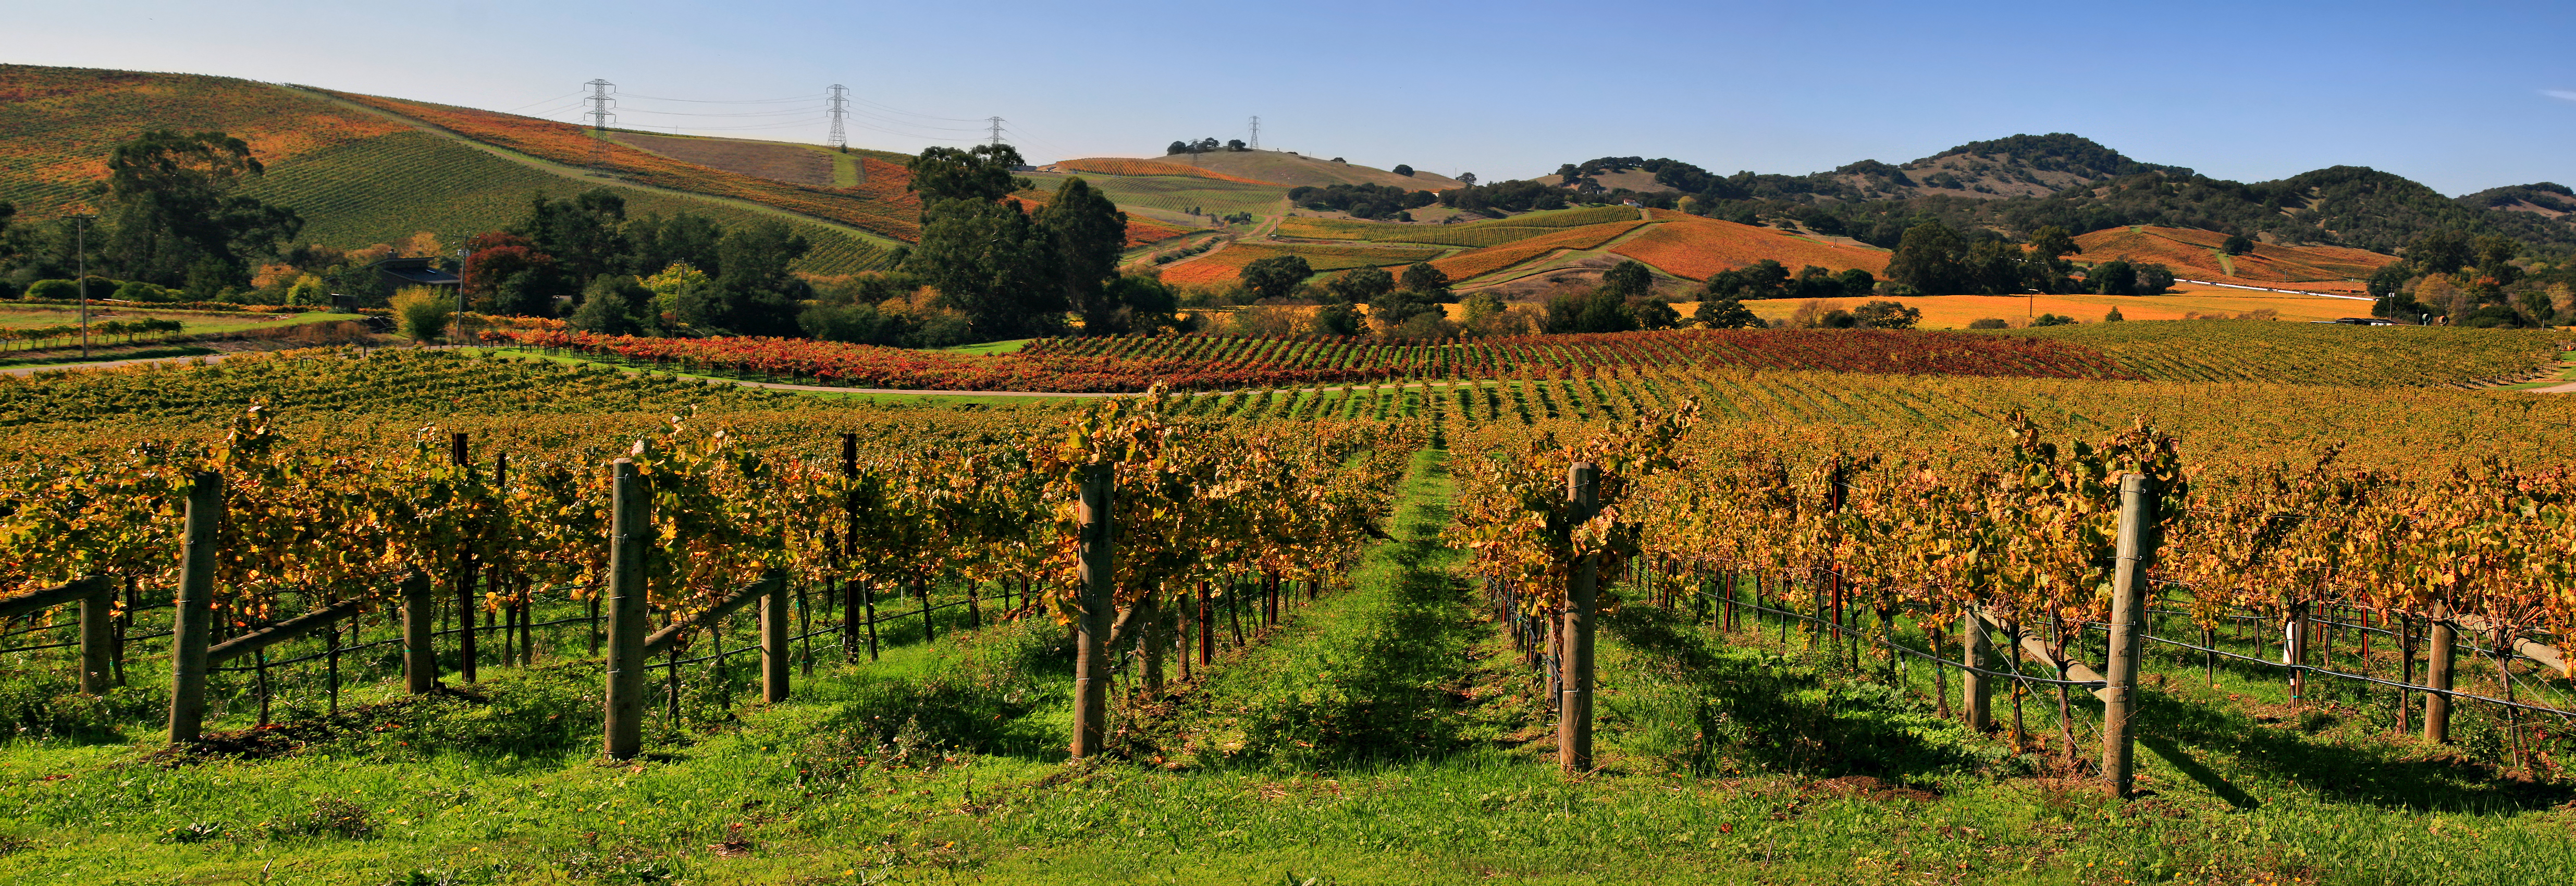 File:Vineyards in Napa Valley 7.jpg - Wikimedia Commons